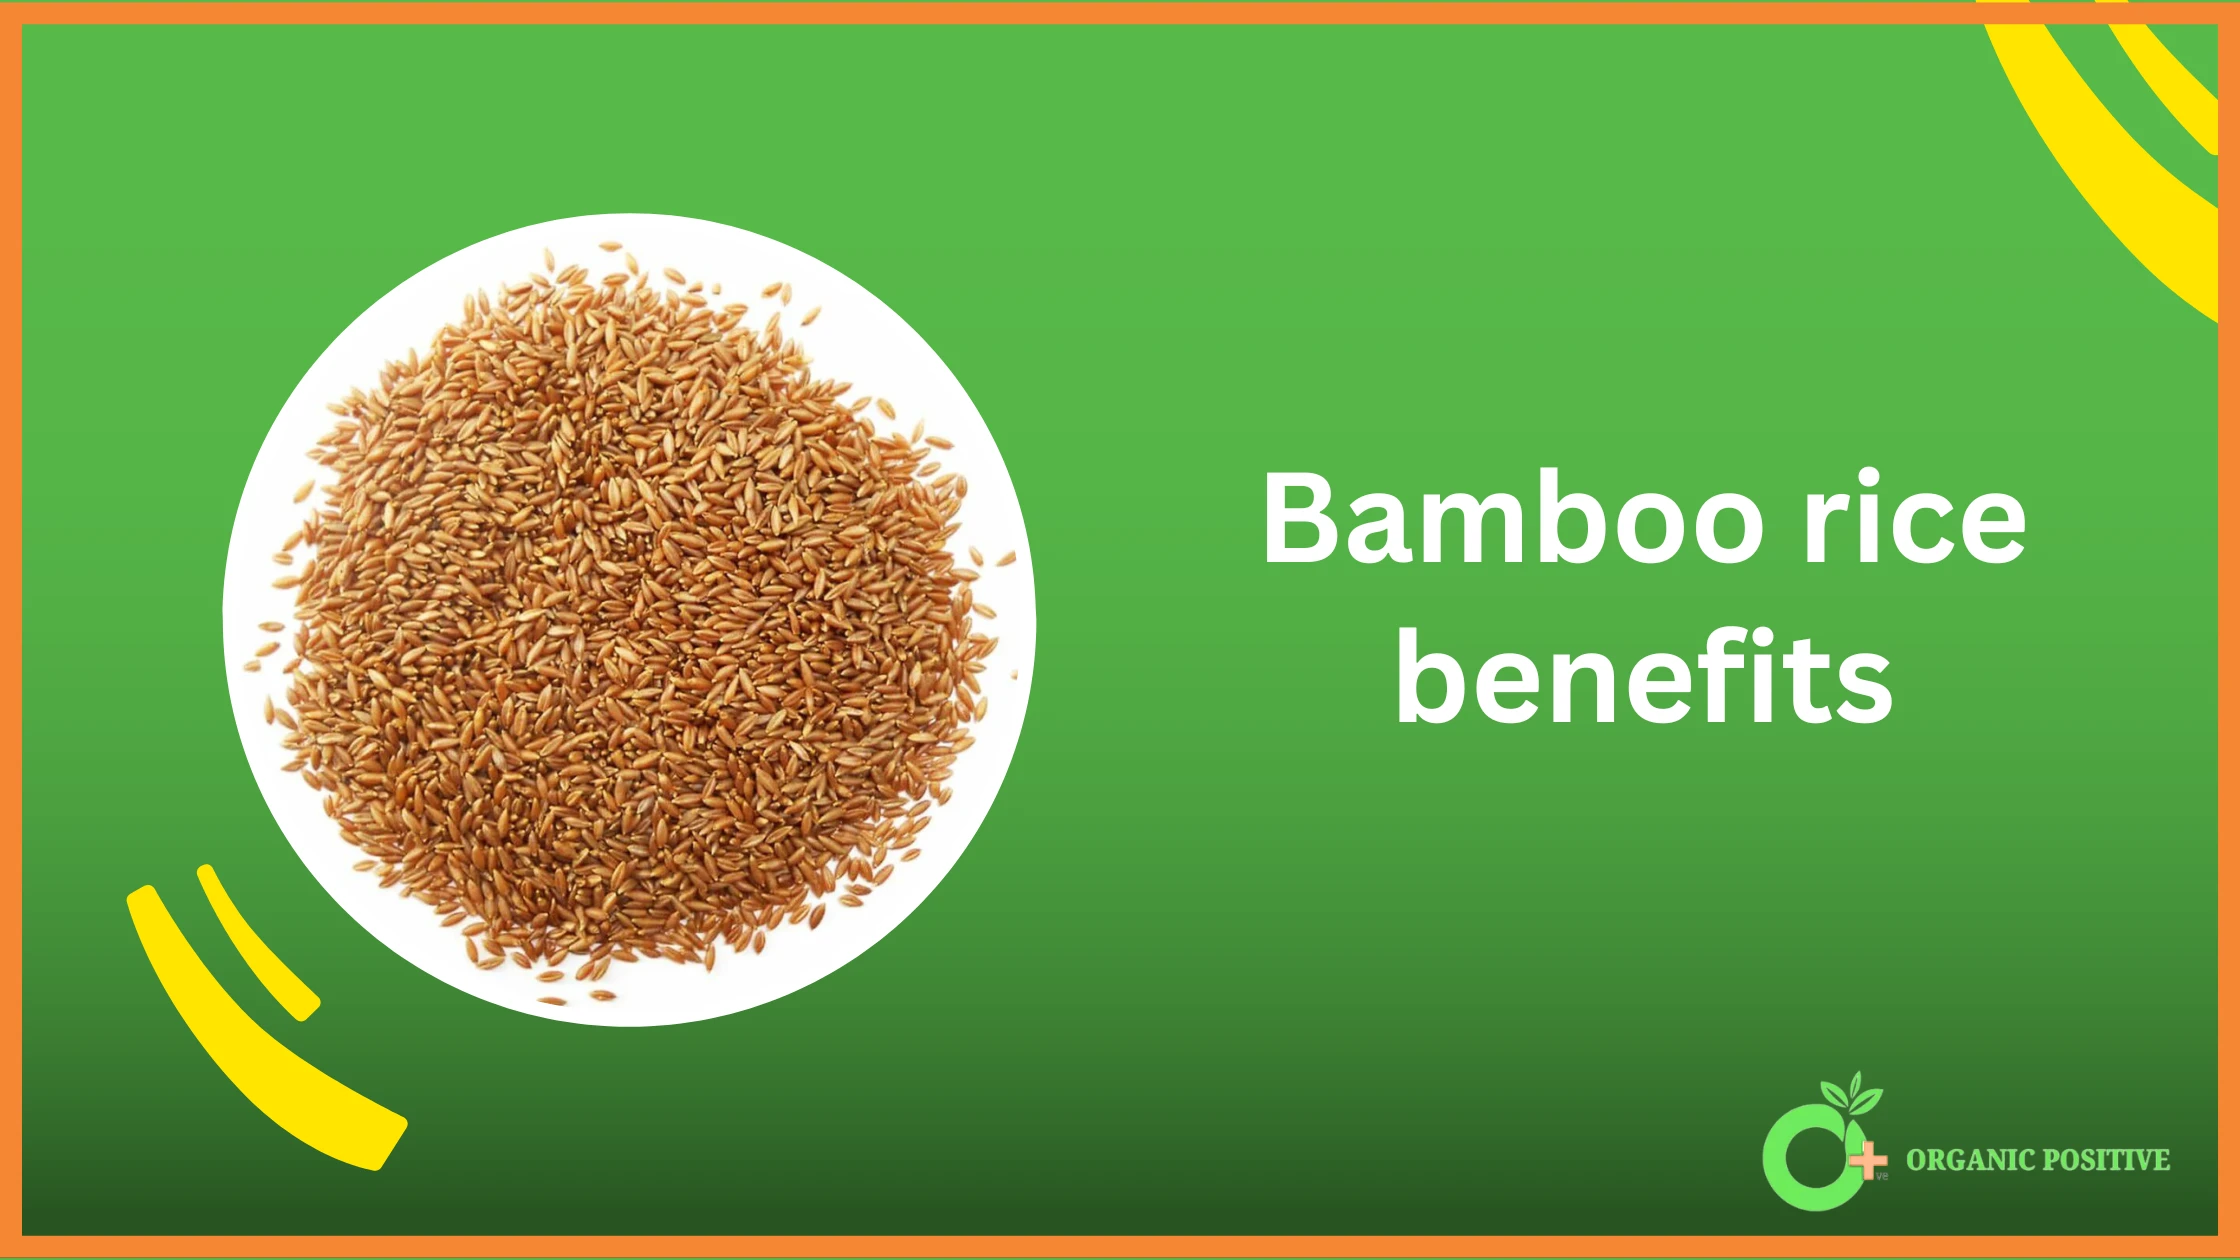 Bamboo rice benefits